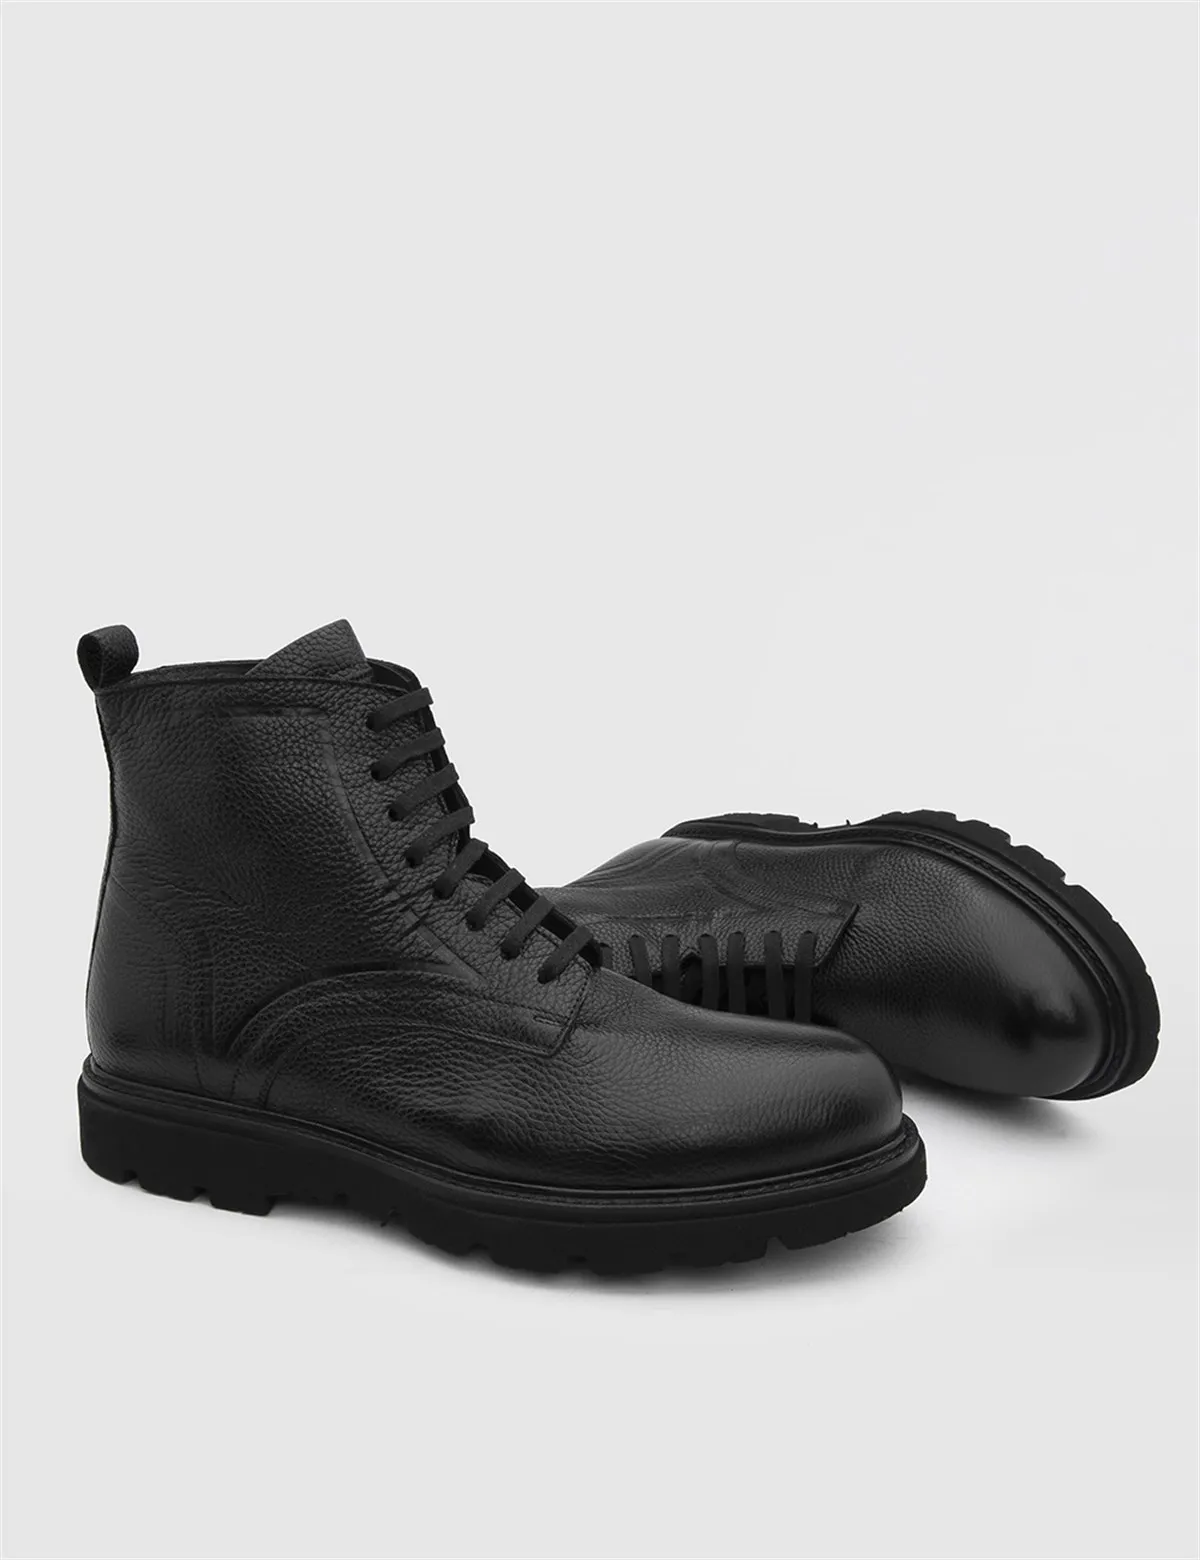 

ILVi-Genuine Leather Handmade Sorbus Black Floater Boot Man's Shoes 2022 Fall/Winter